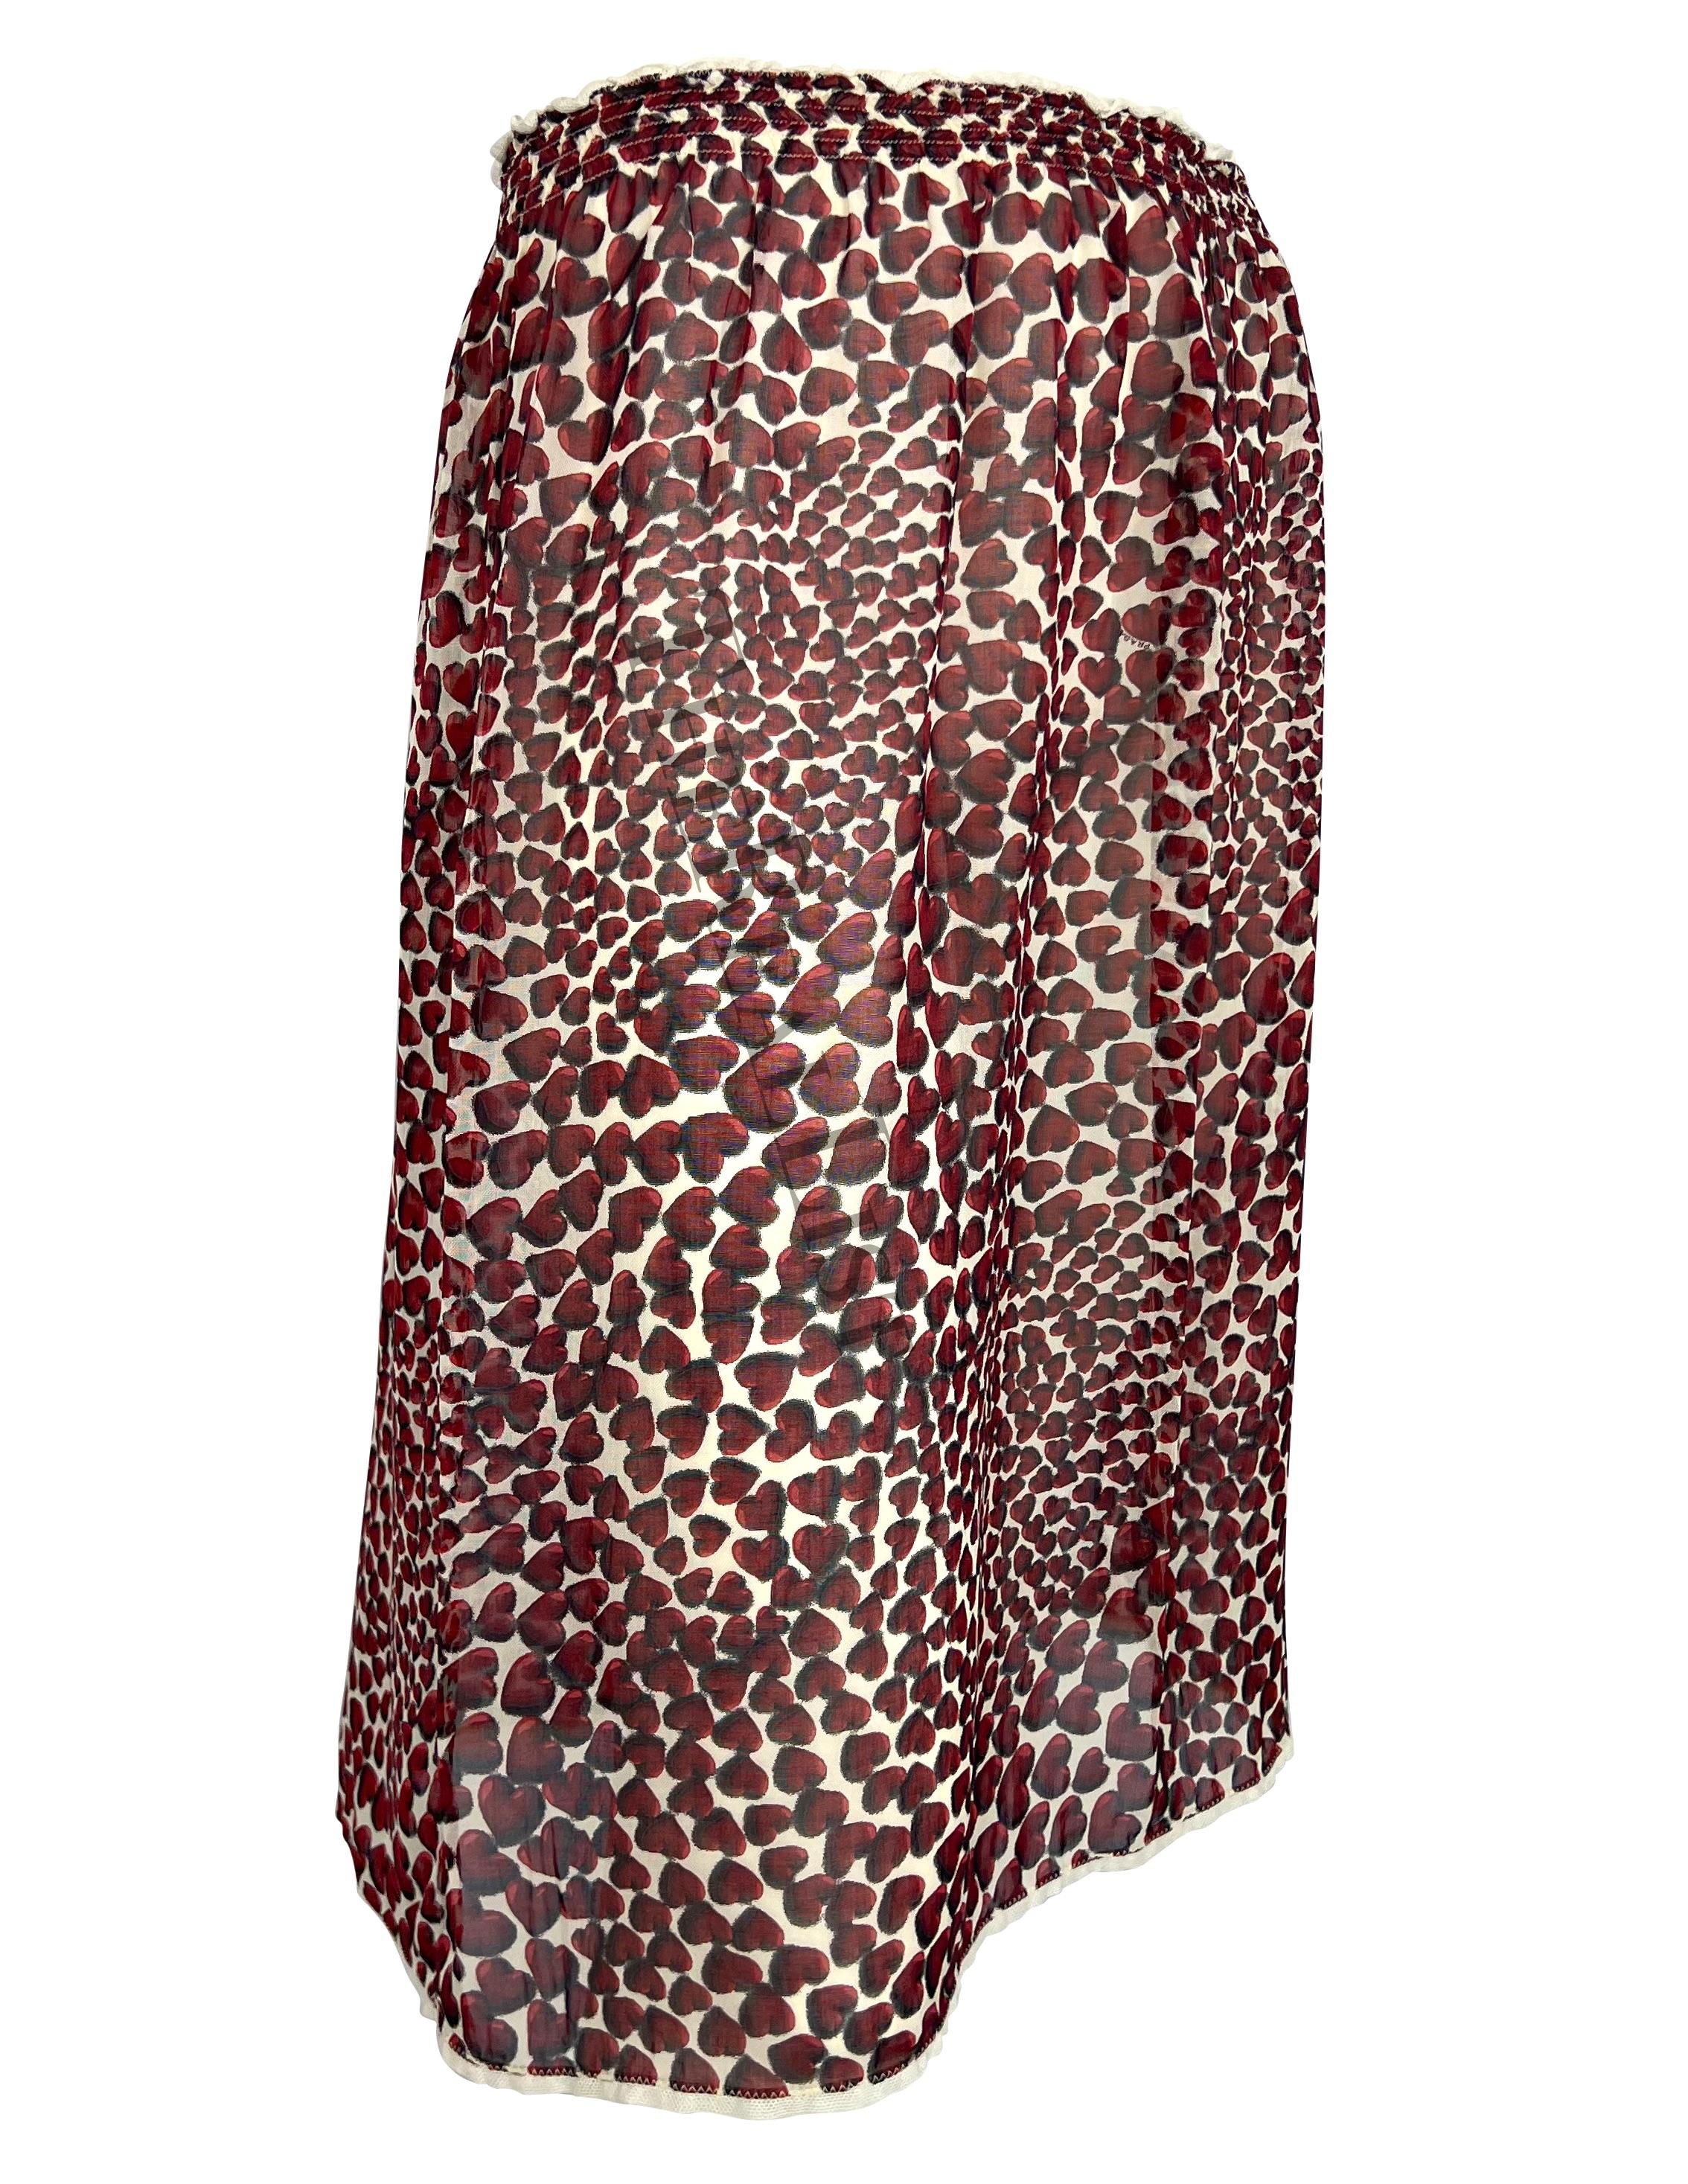 S/S 2000 Prada by Miuccia Runway Semi-Sheer Heart Print Chiffon Skirt For Sale 2